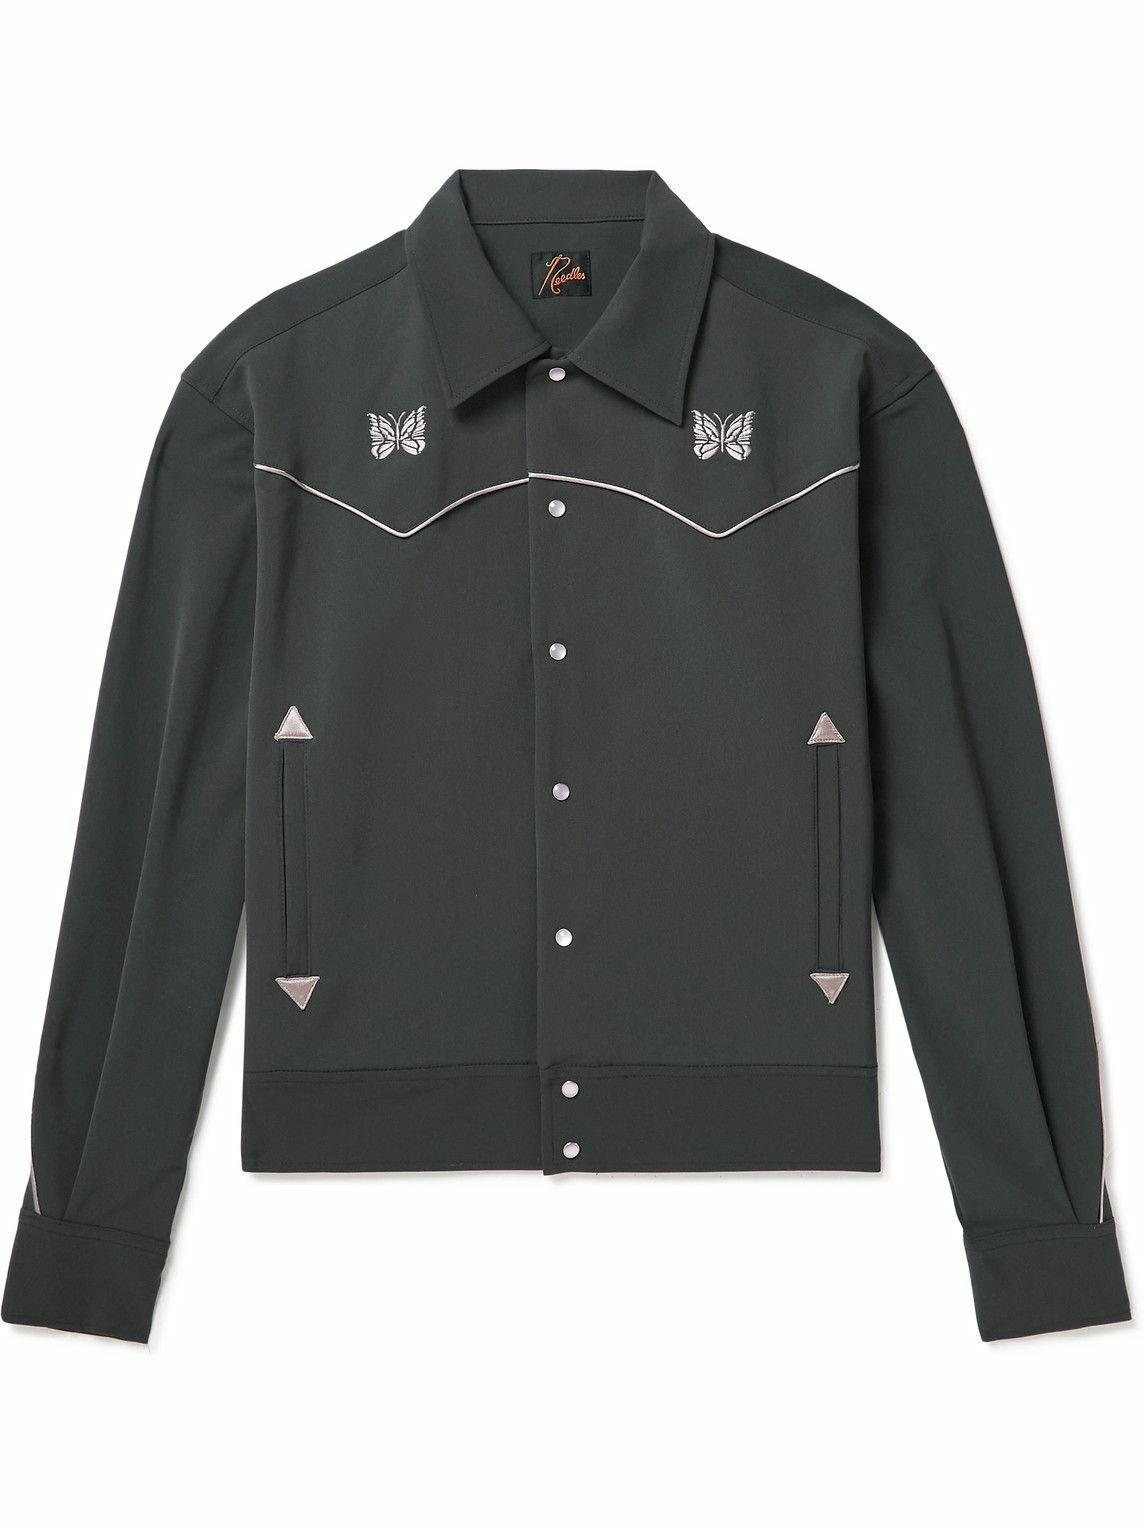 cowboy jacket XL ブラック black parple 5-1 - 通販 - csa.sakura.ne.jp